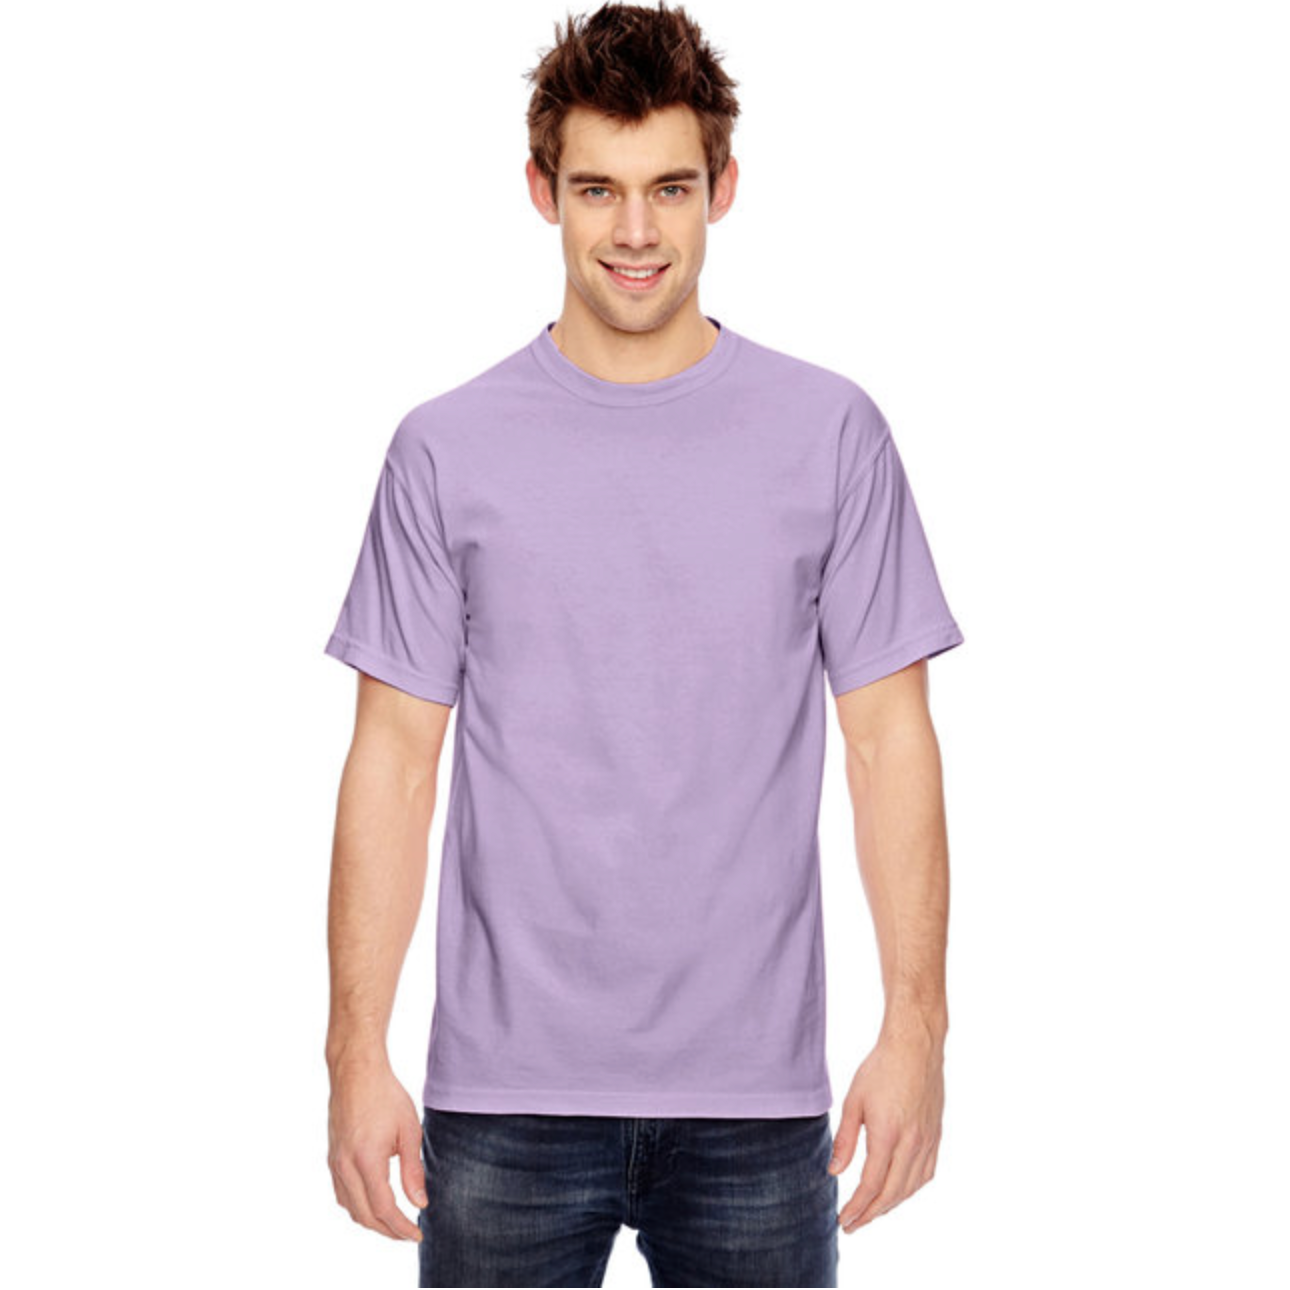 C1717 Comfort Colors Adult Heavyweight T-Shirt (Fresh Bucks)